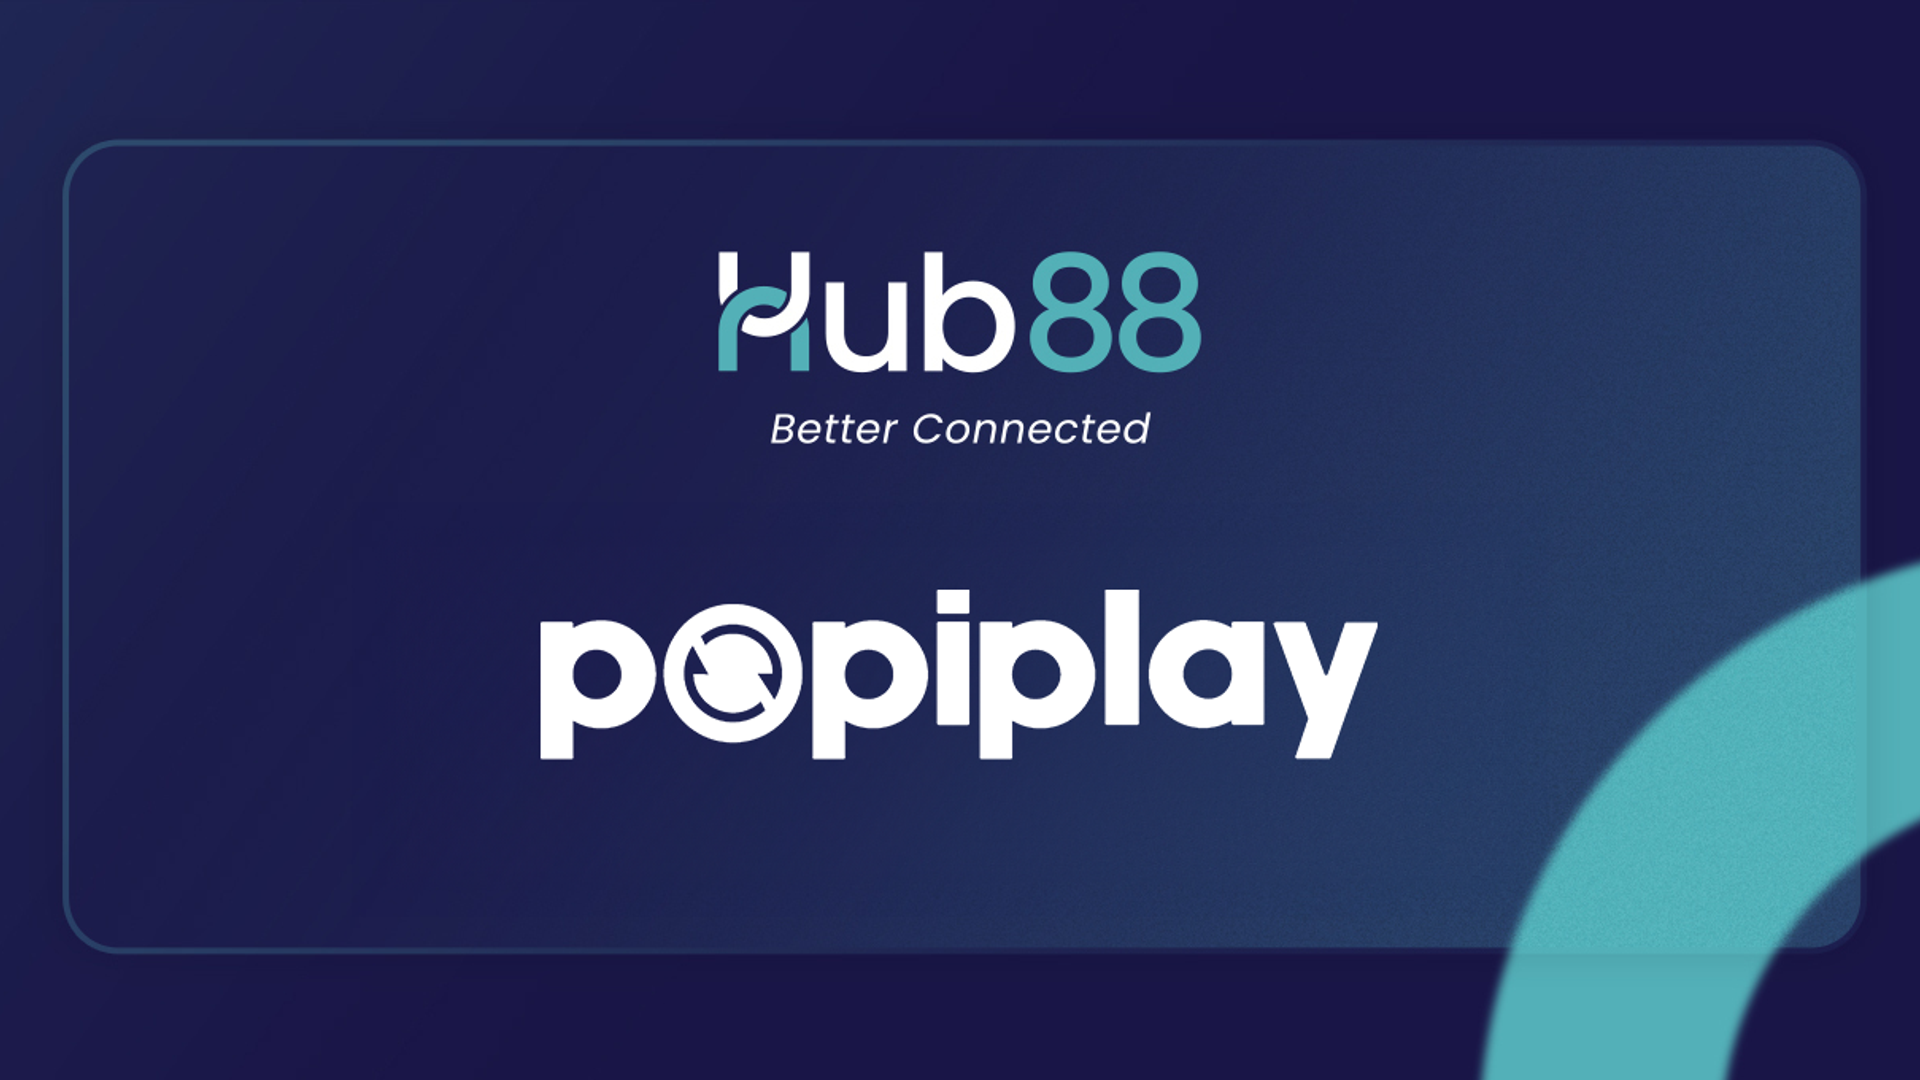 Cover Image for Hub88 adds Popiplay portfolio to platform